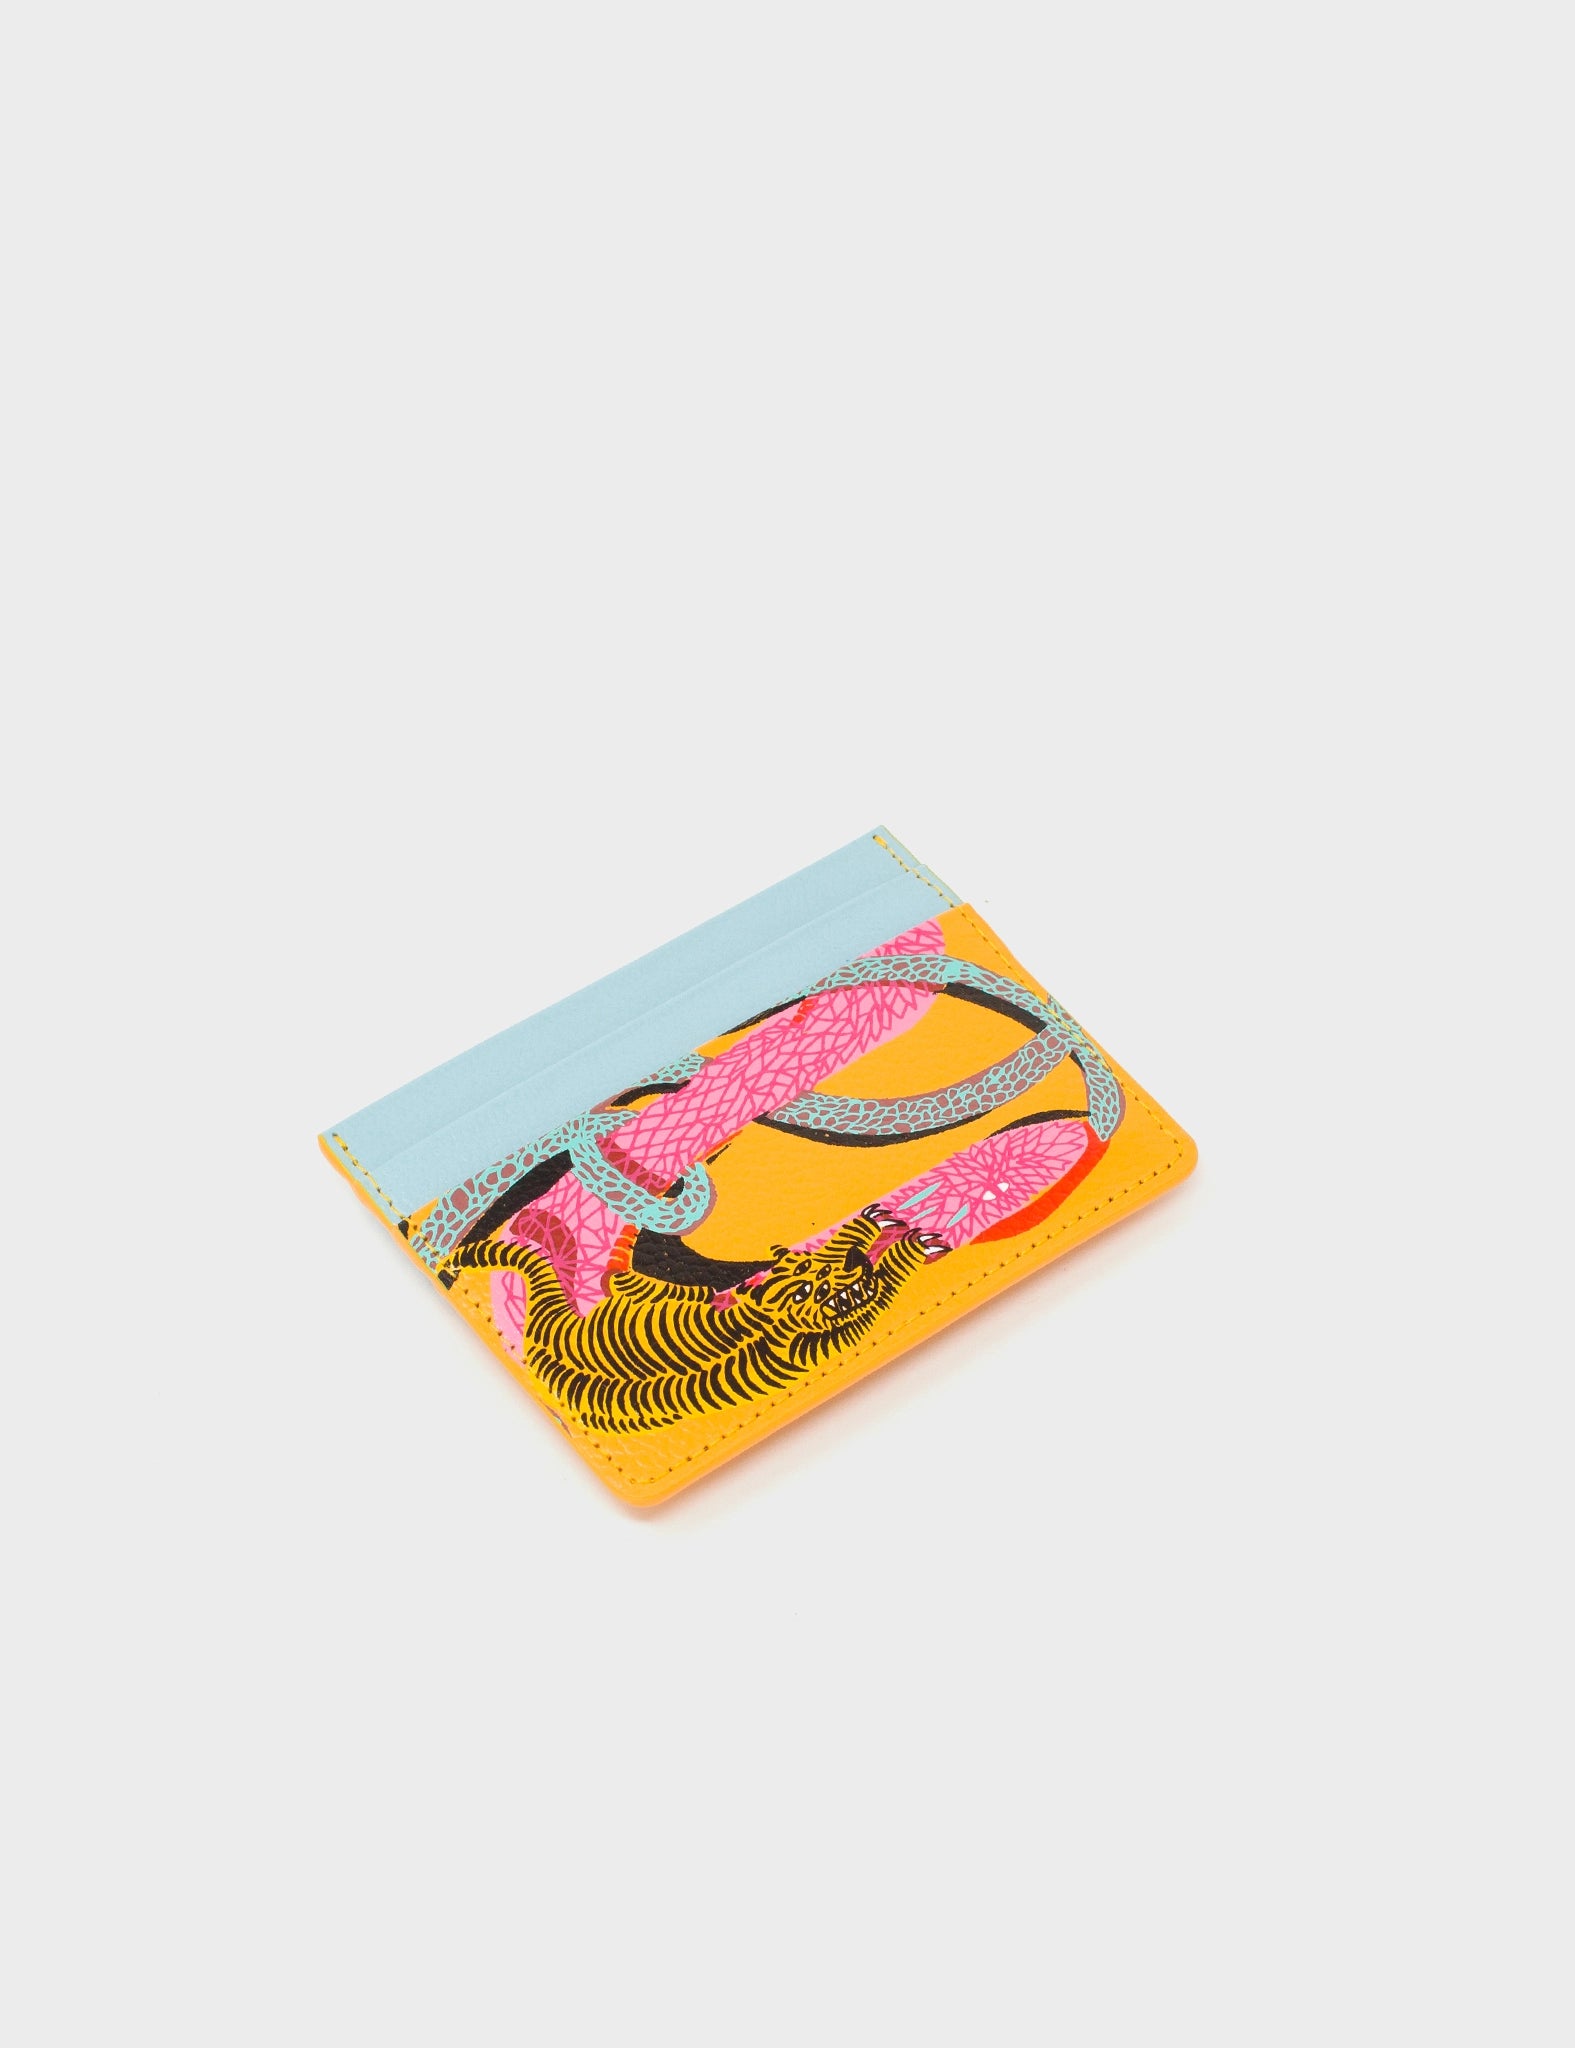 Marigold And Stratosphere Blue Leather Cardholder - Tiger and Snake Print - Side